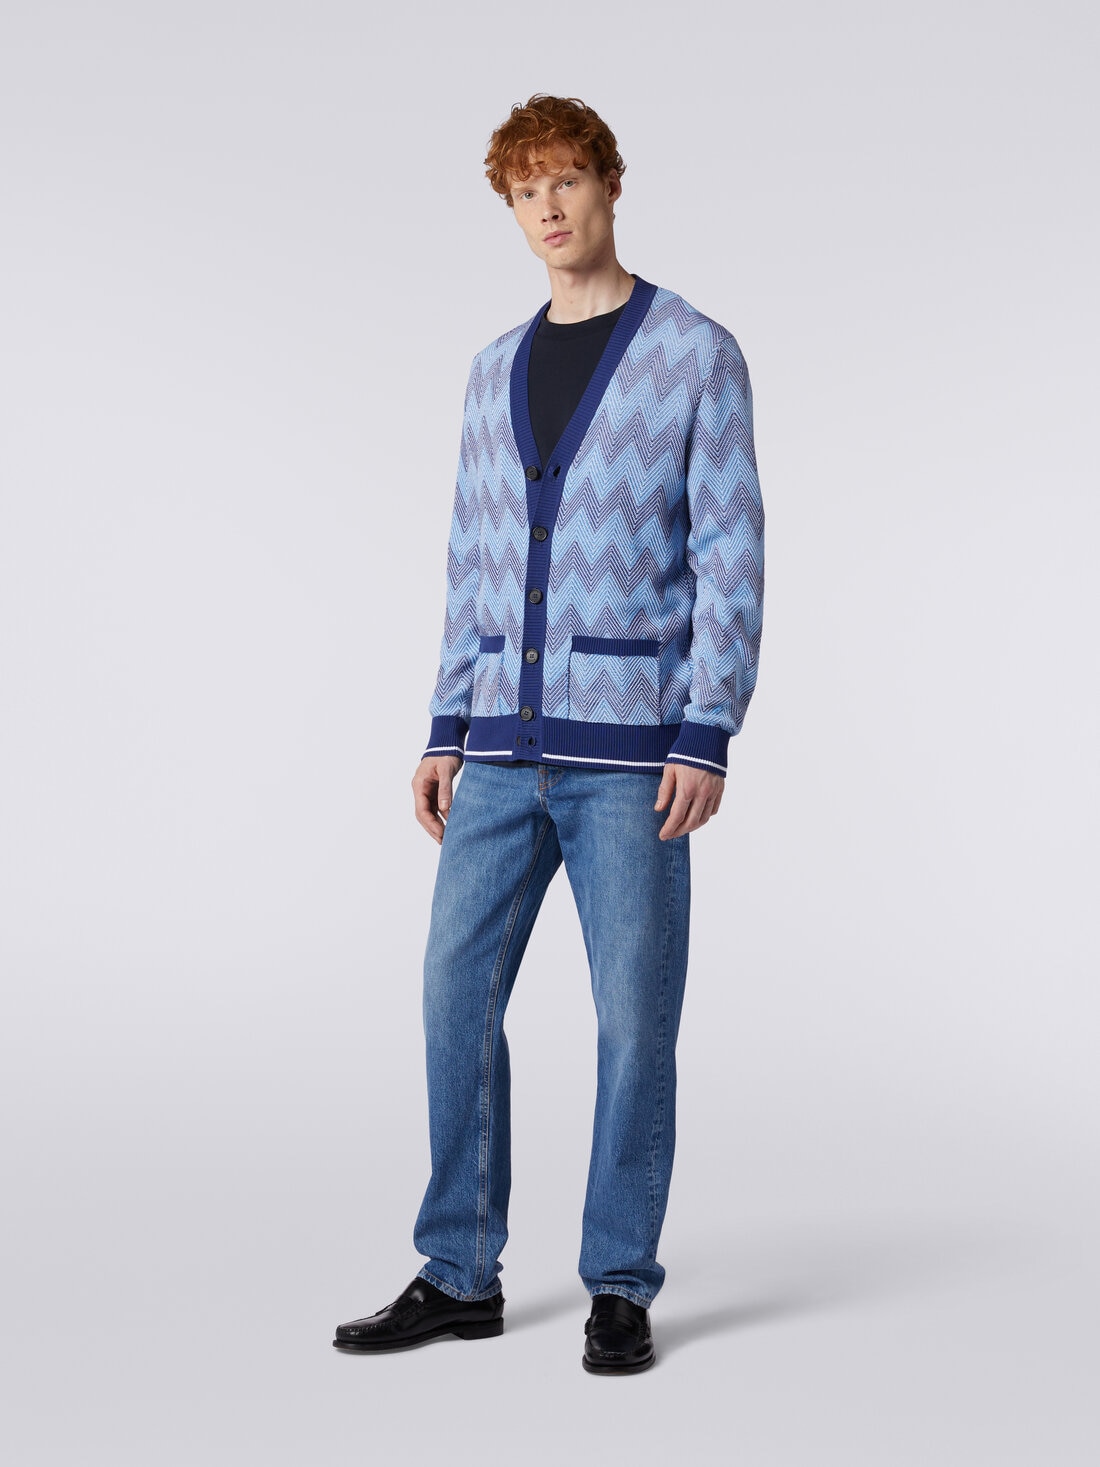 Cardigan in chevron cotton knit with contrasting trim, Blue - US24SM07BK034YS72F8 - 2